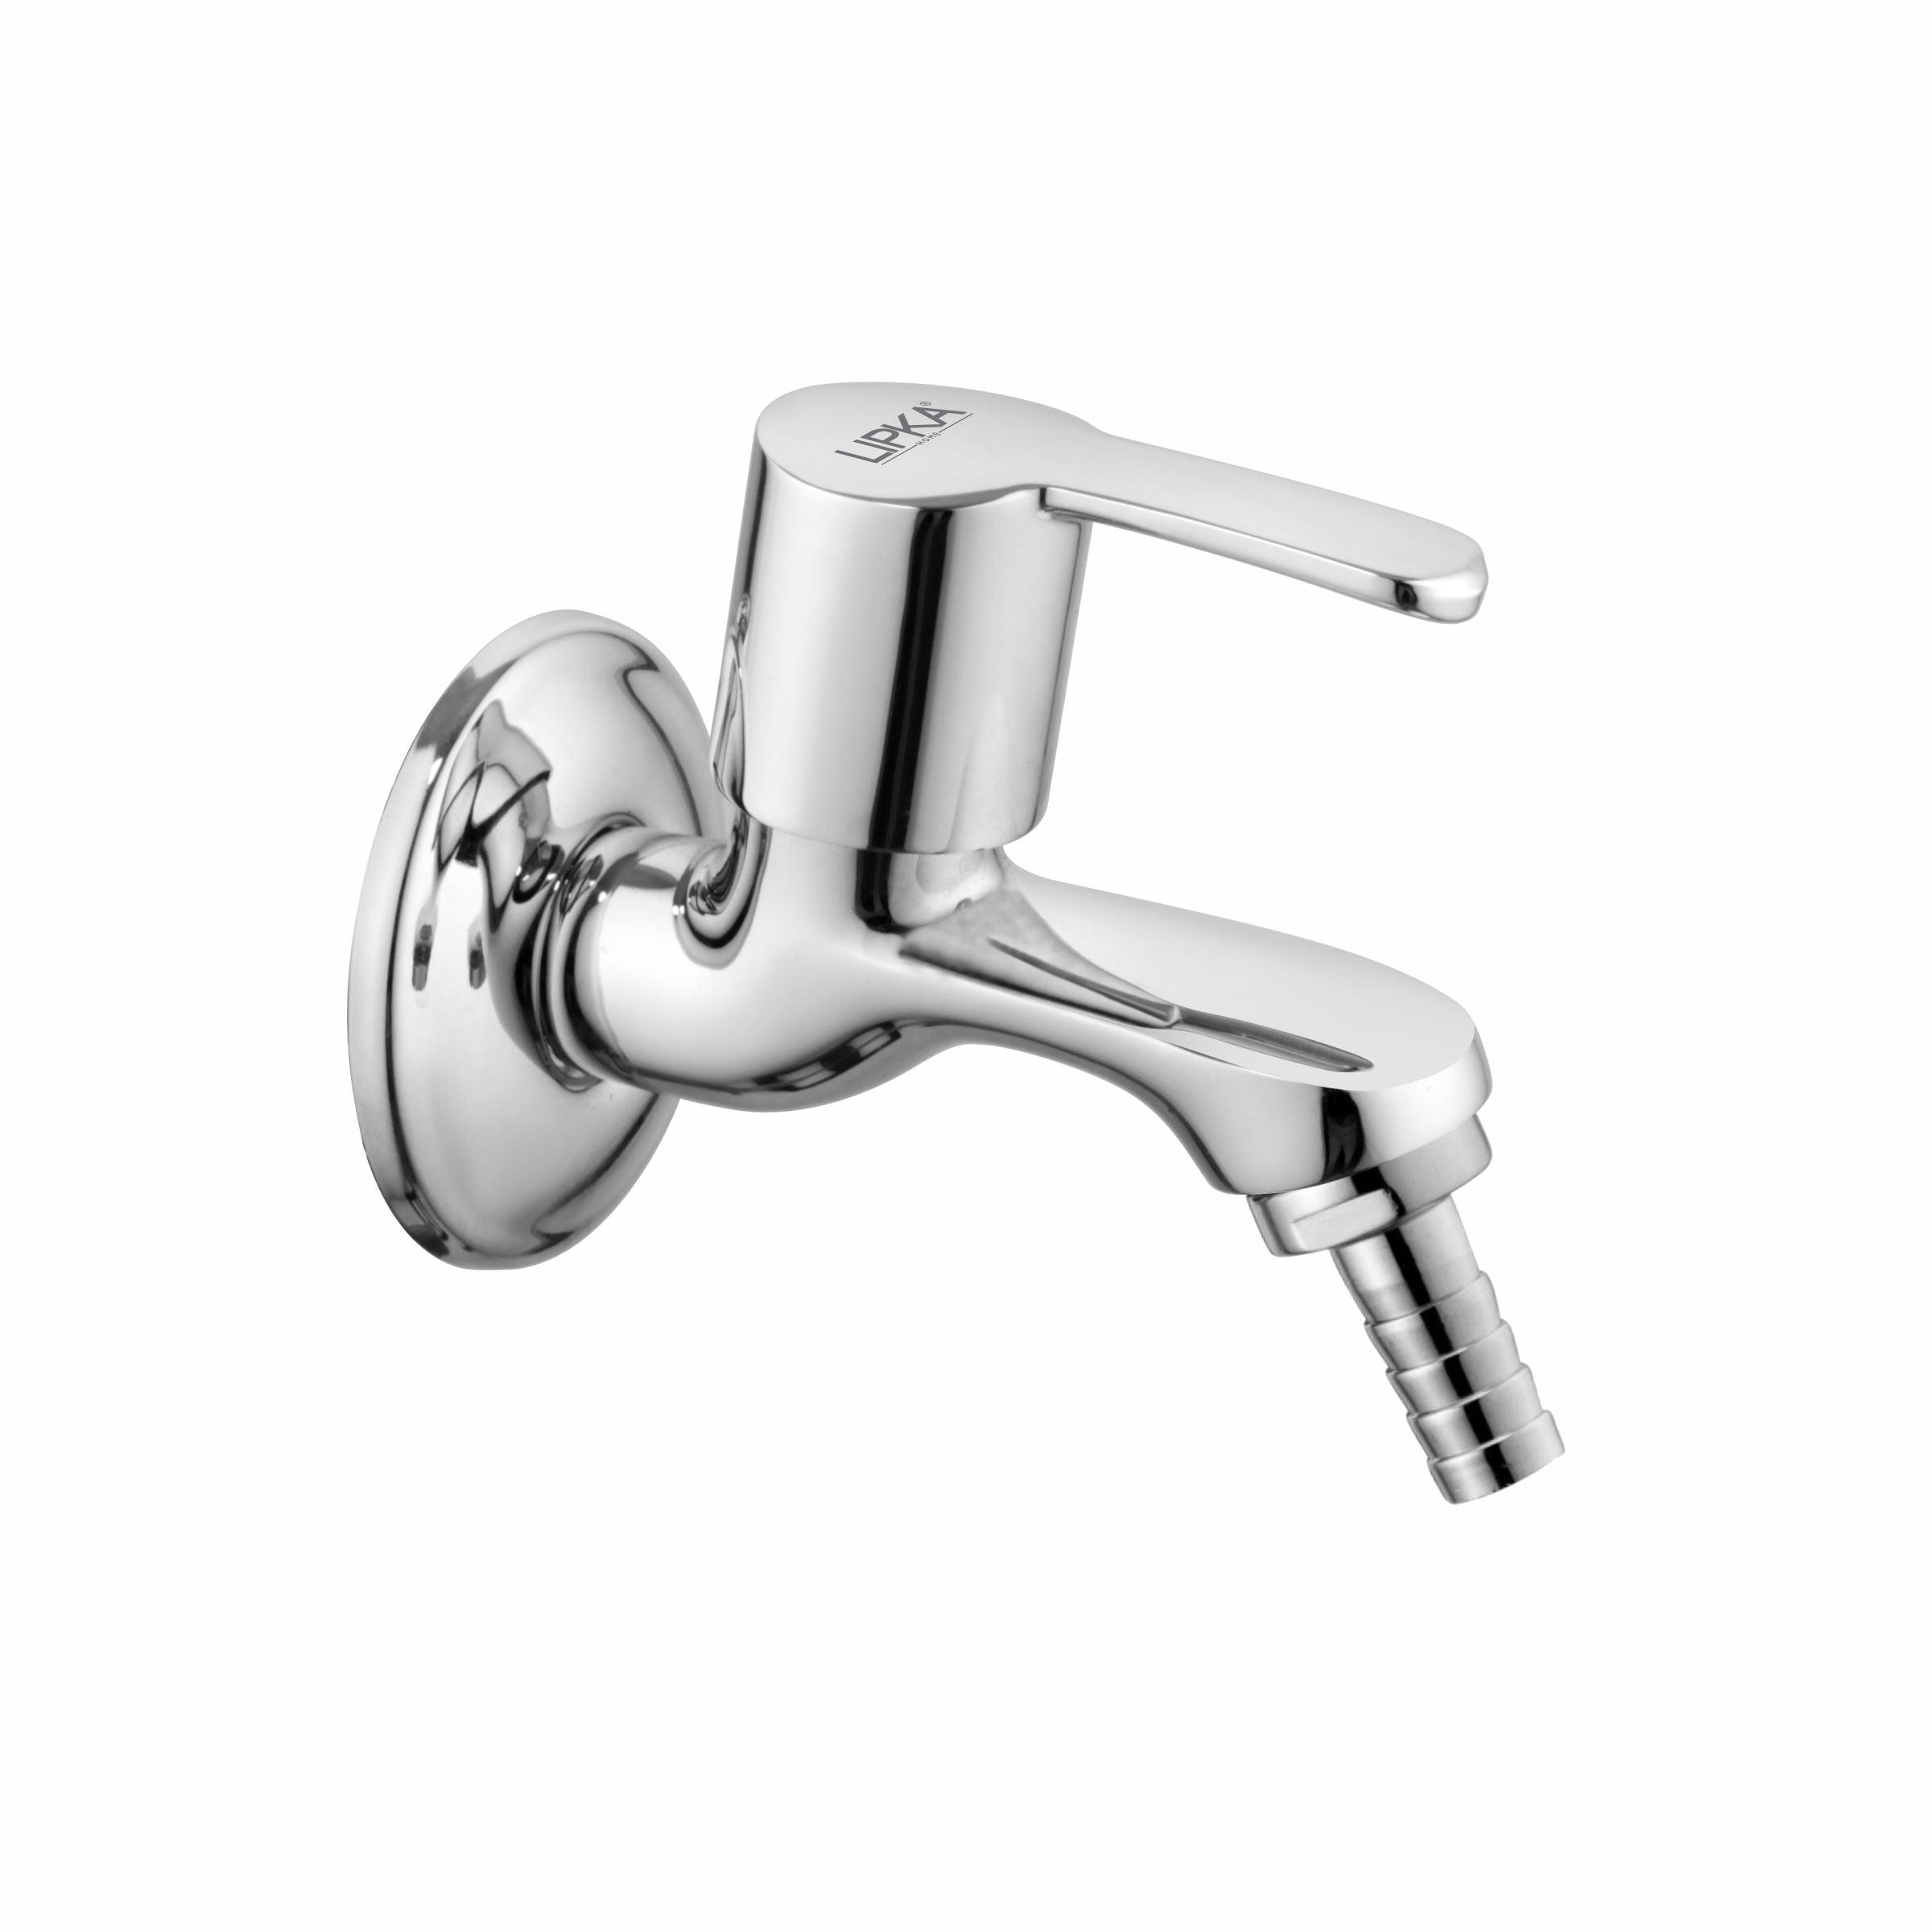 Frenk Nozzle Bib Tap Brass Faucet - LIPKA - Lipka Home